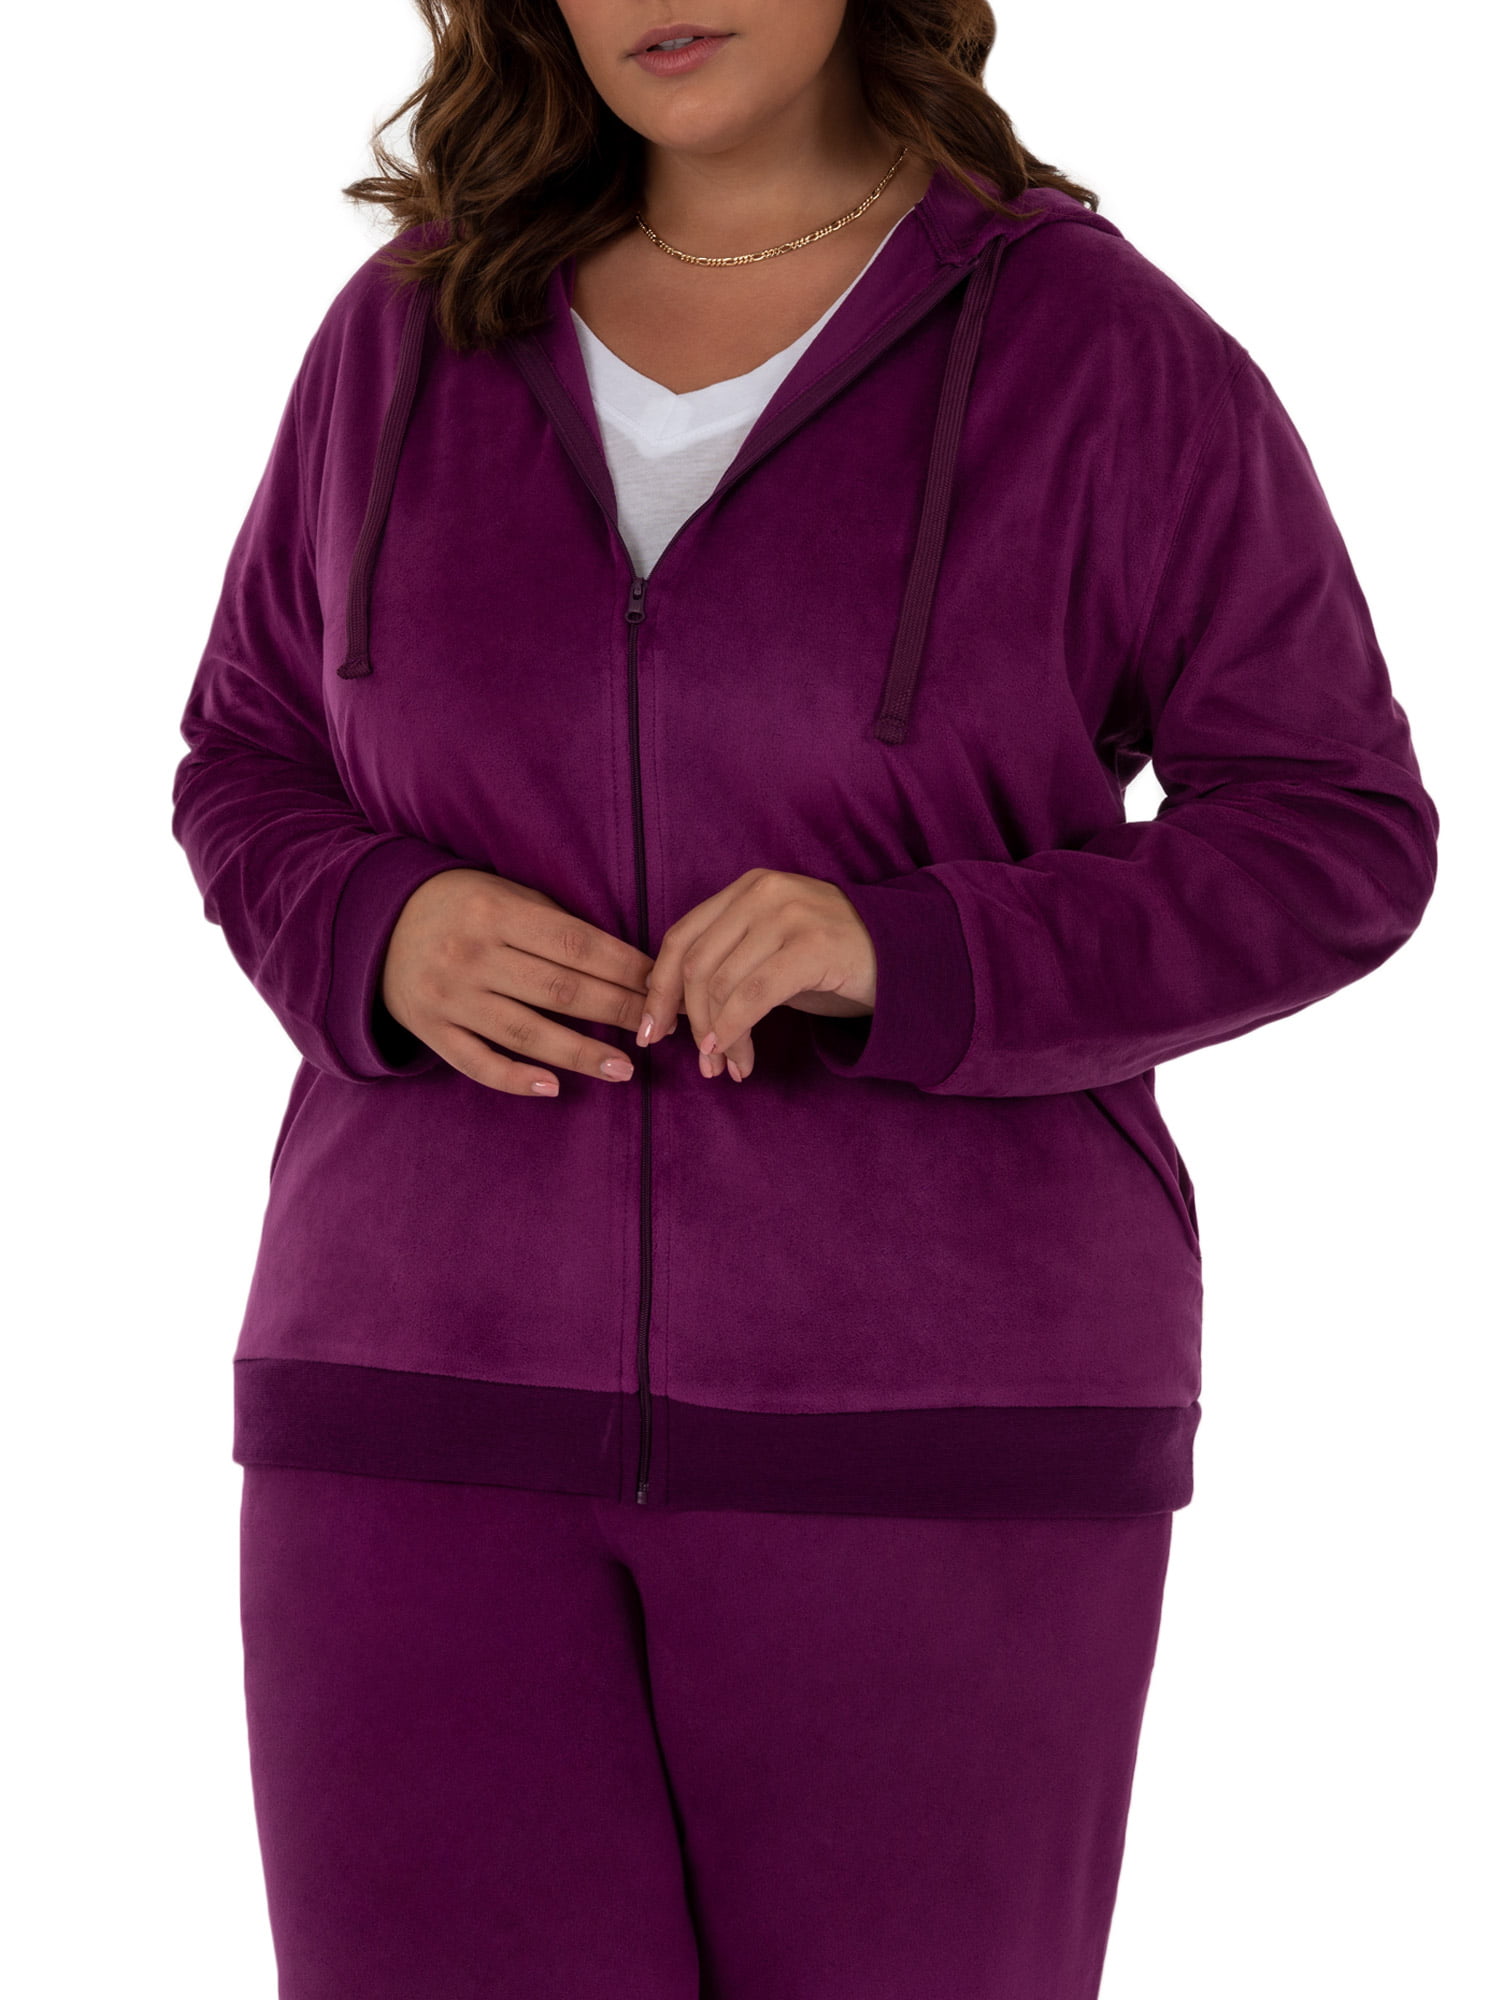 Athletic Works Women's Plus Size Velour Hoodie Jacket - Walmart.com